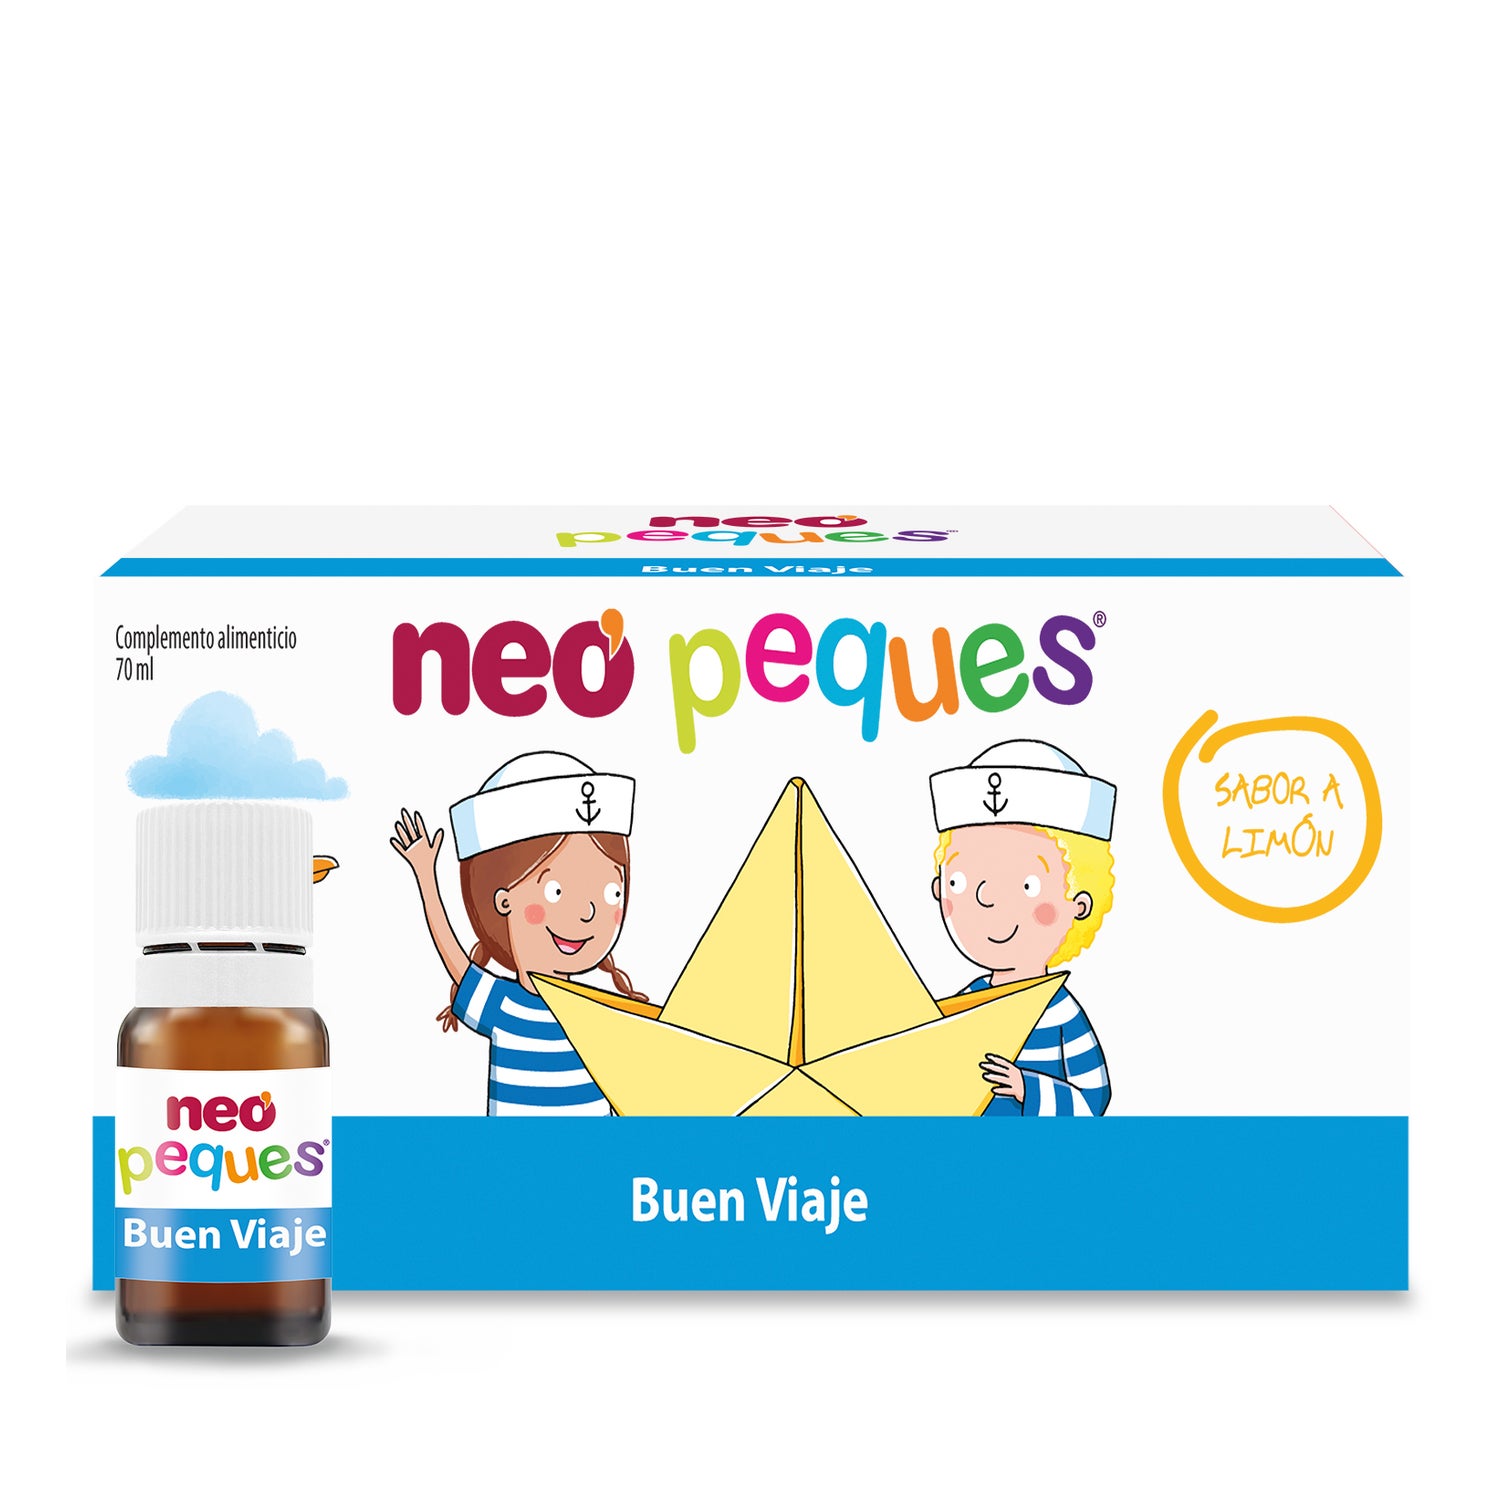 Neo Peques Omega 3 DHA Gummies (30 pcs.) desde 9,32 €